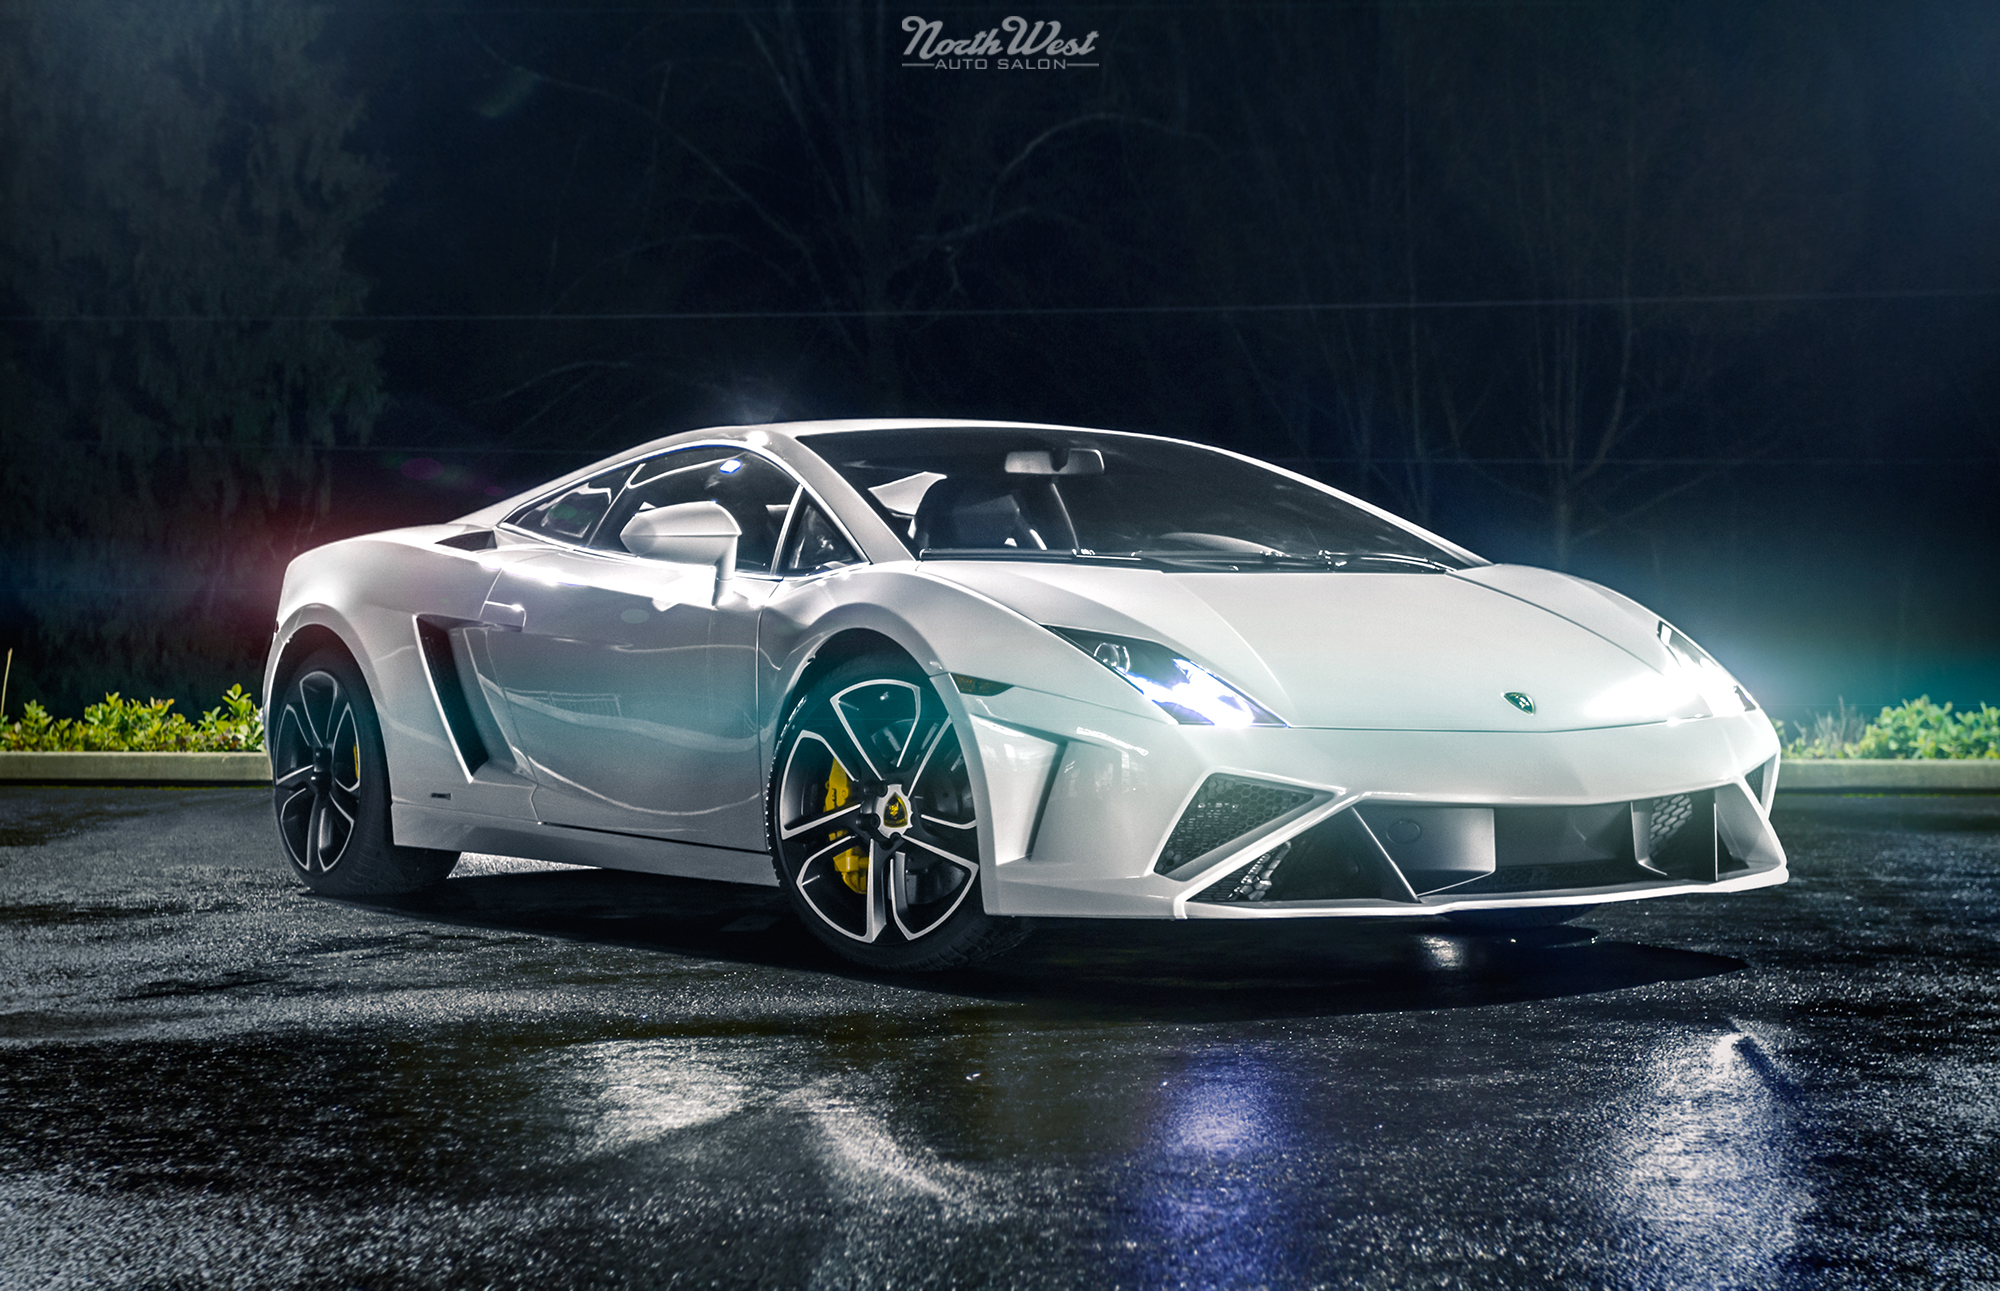 Lamborghini Gallardo #12